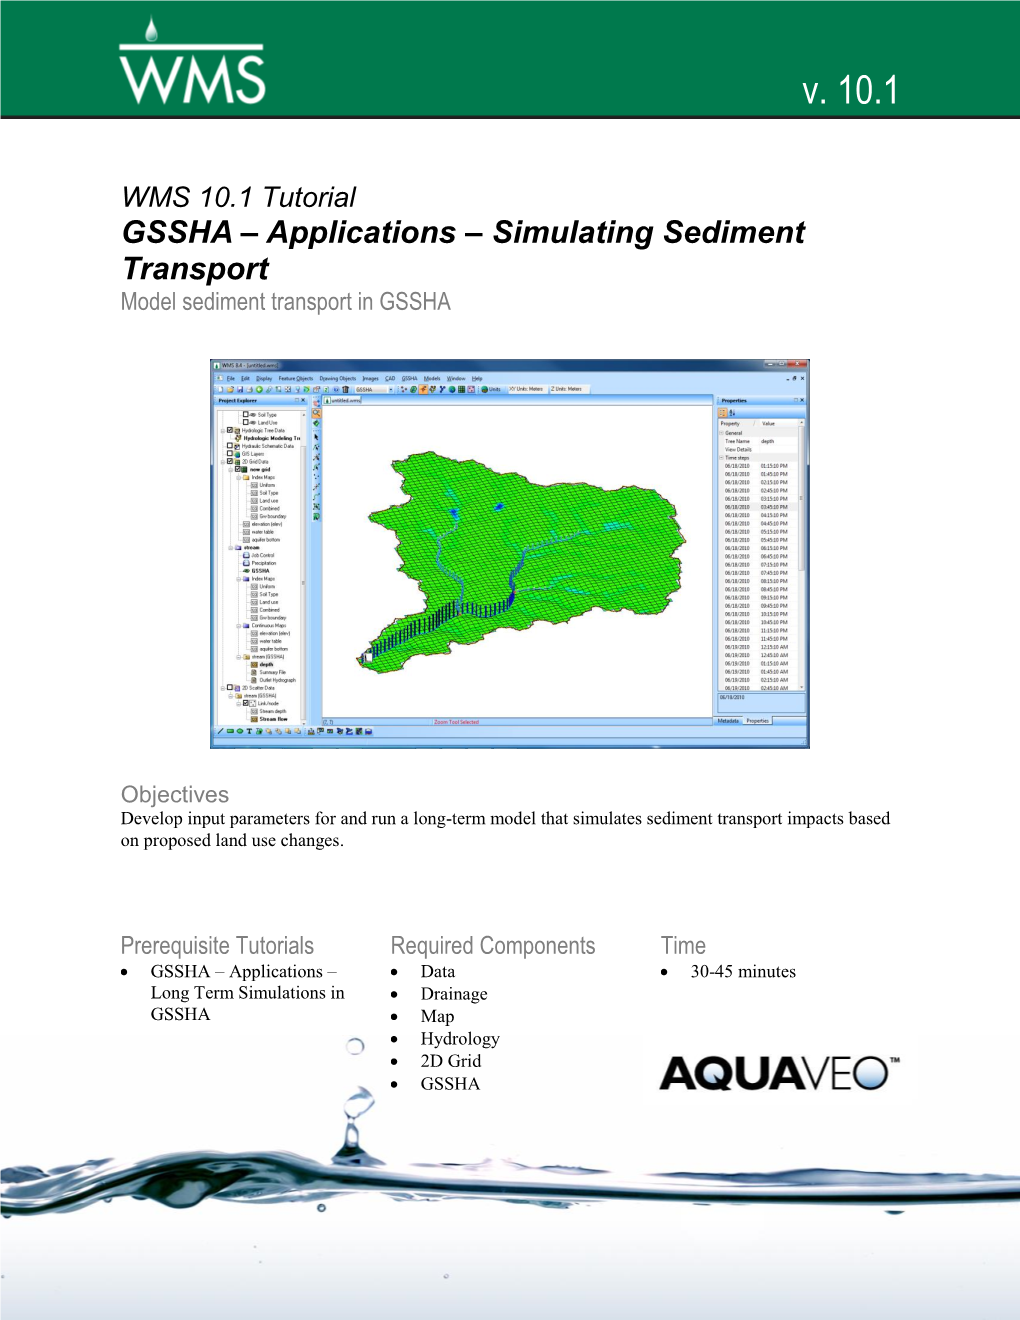 GSSHA – Applications – Simulating Sediment Transport Model Sediment Transport in GSSHA